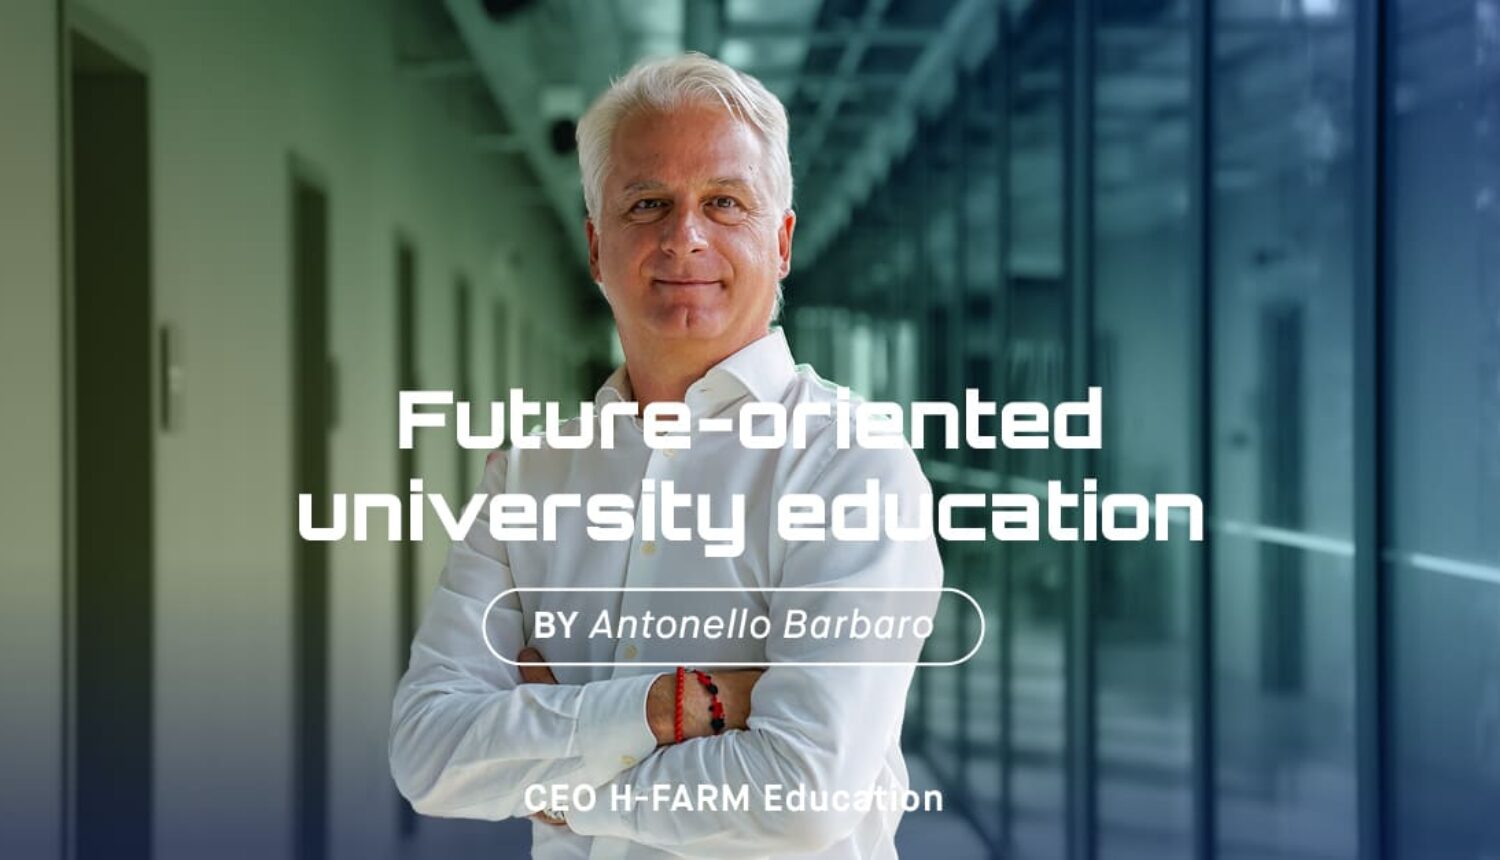 Future-oriented university education